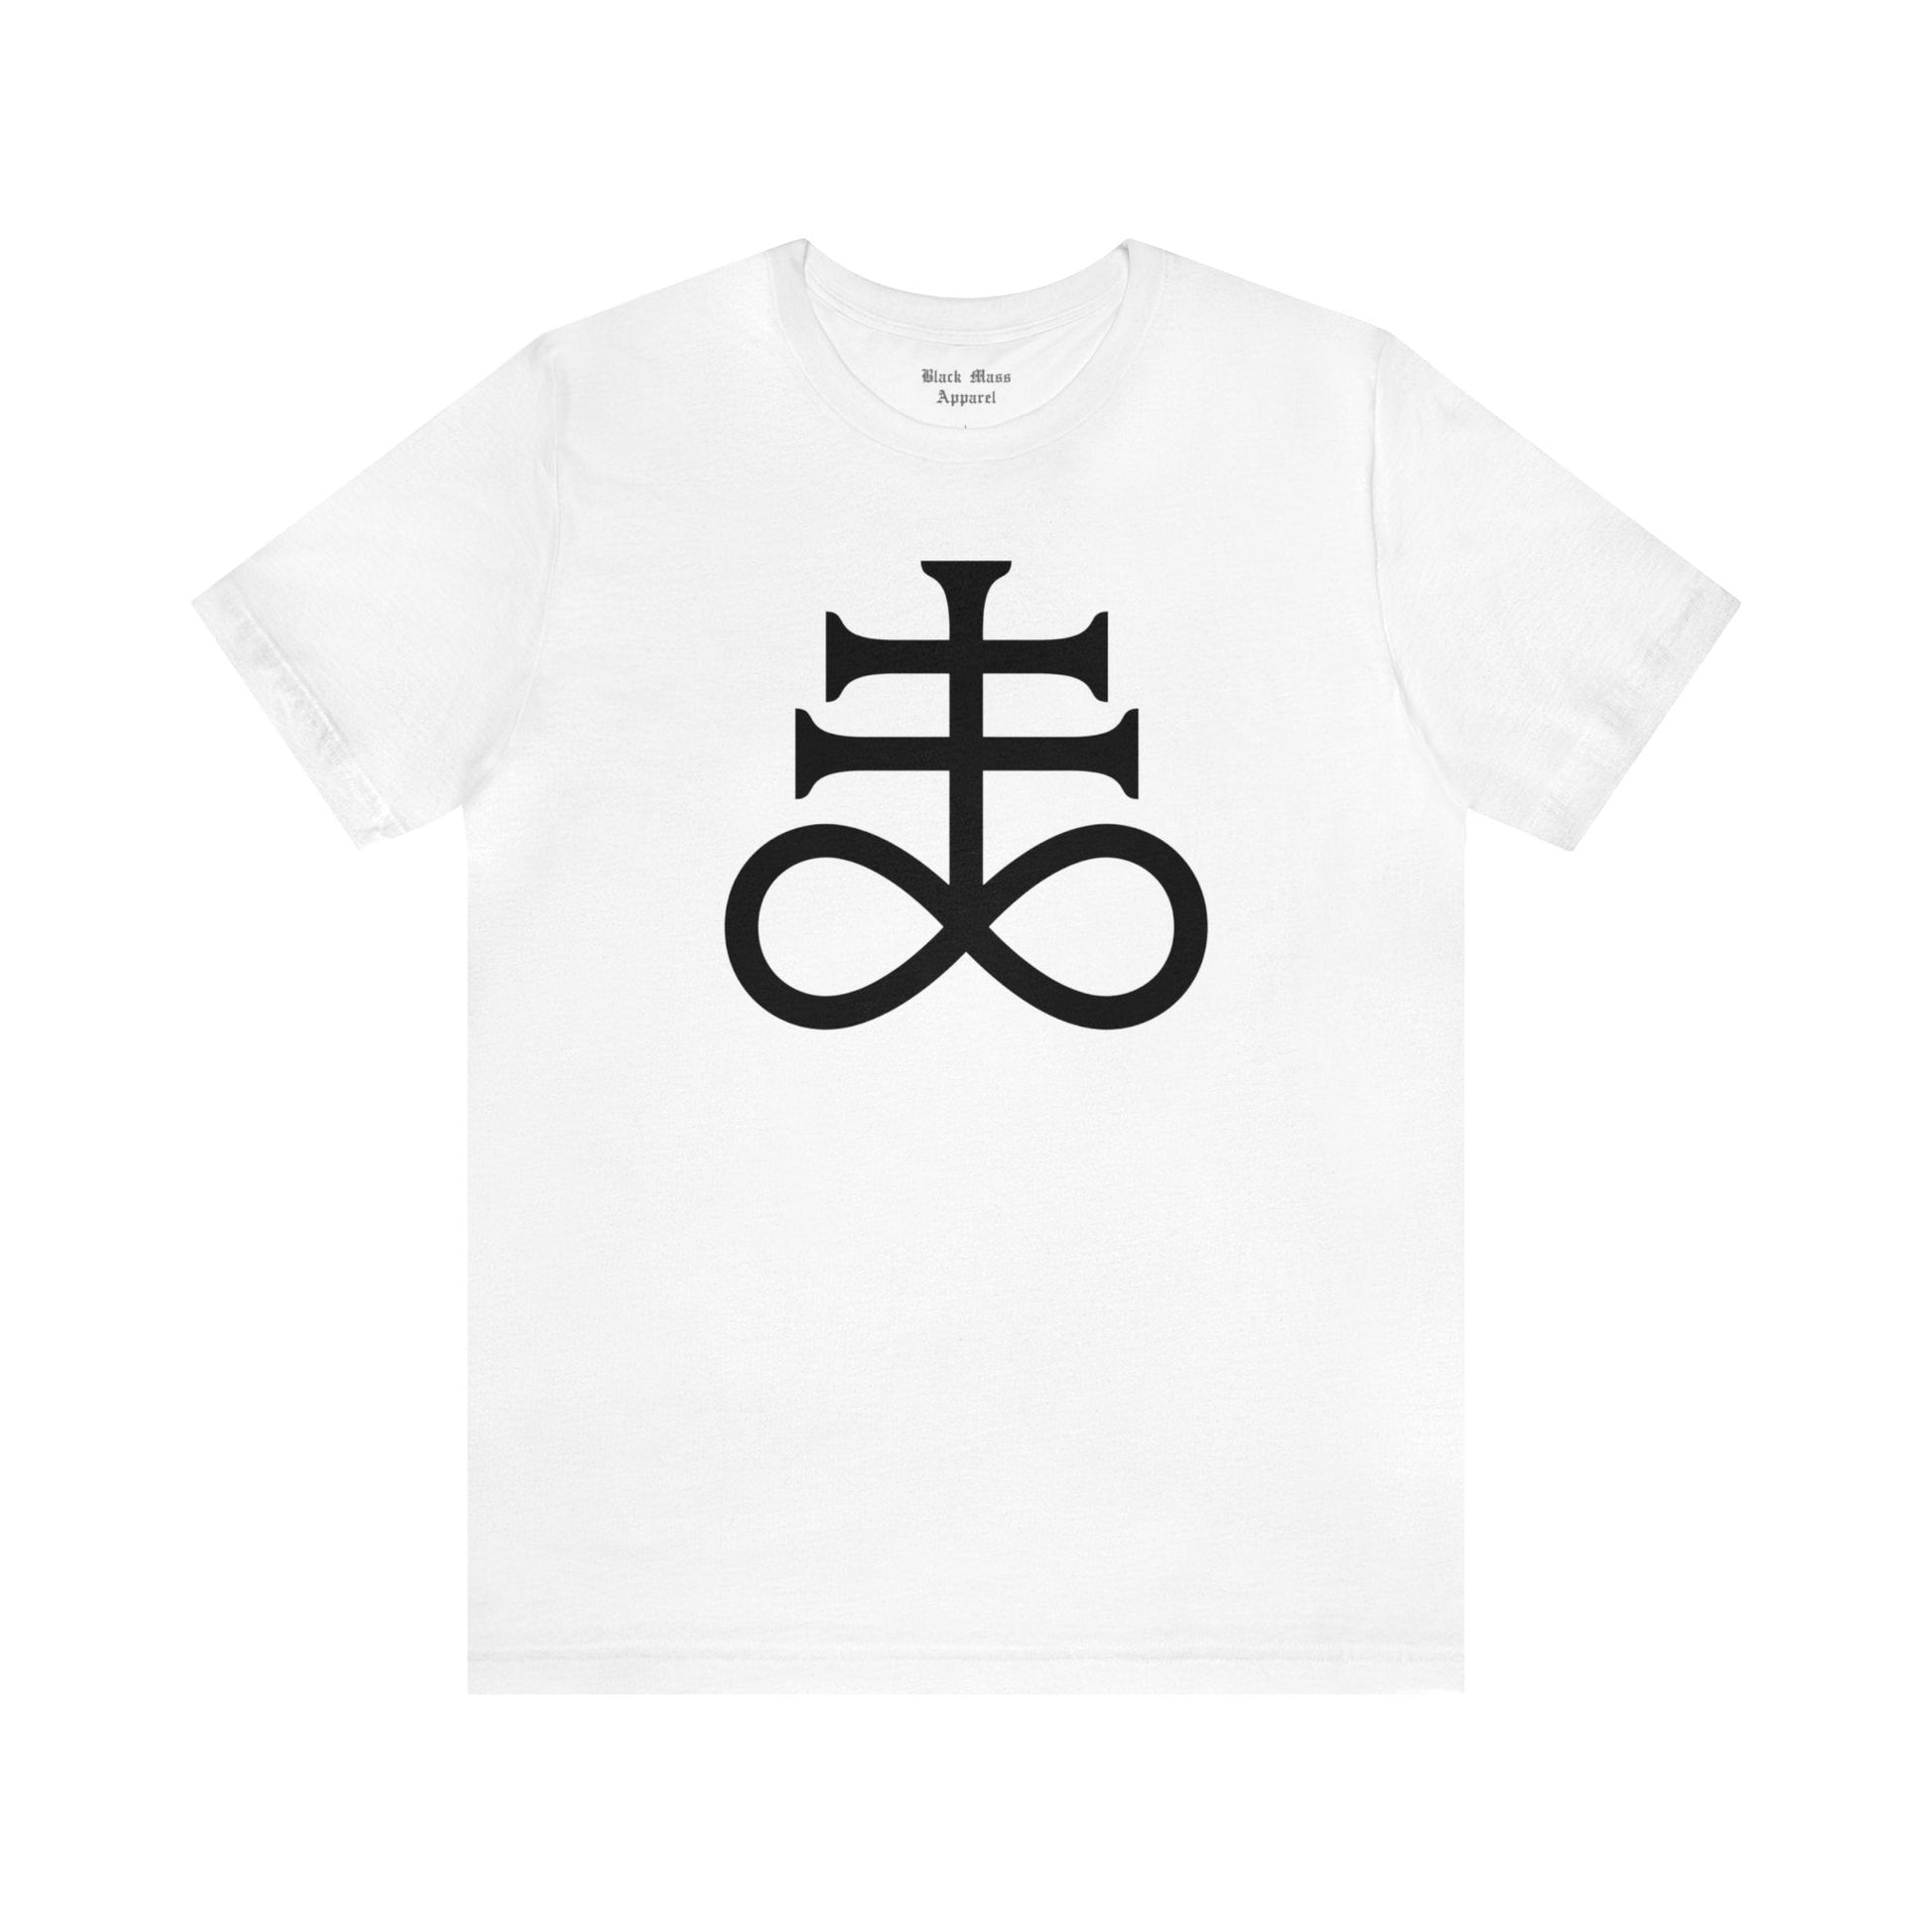 The Leviathan Cross - Black Mass Apparel - T-Shirt